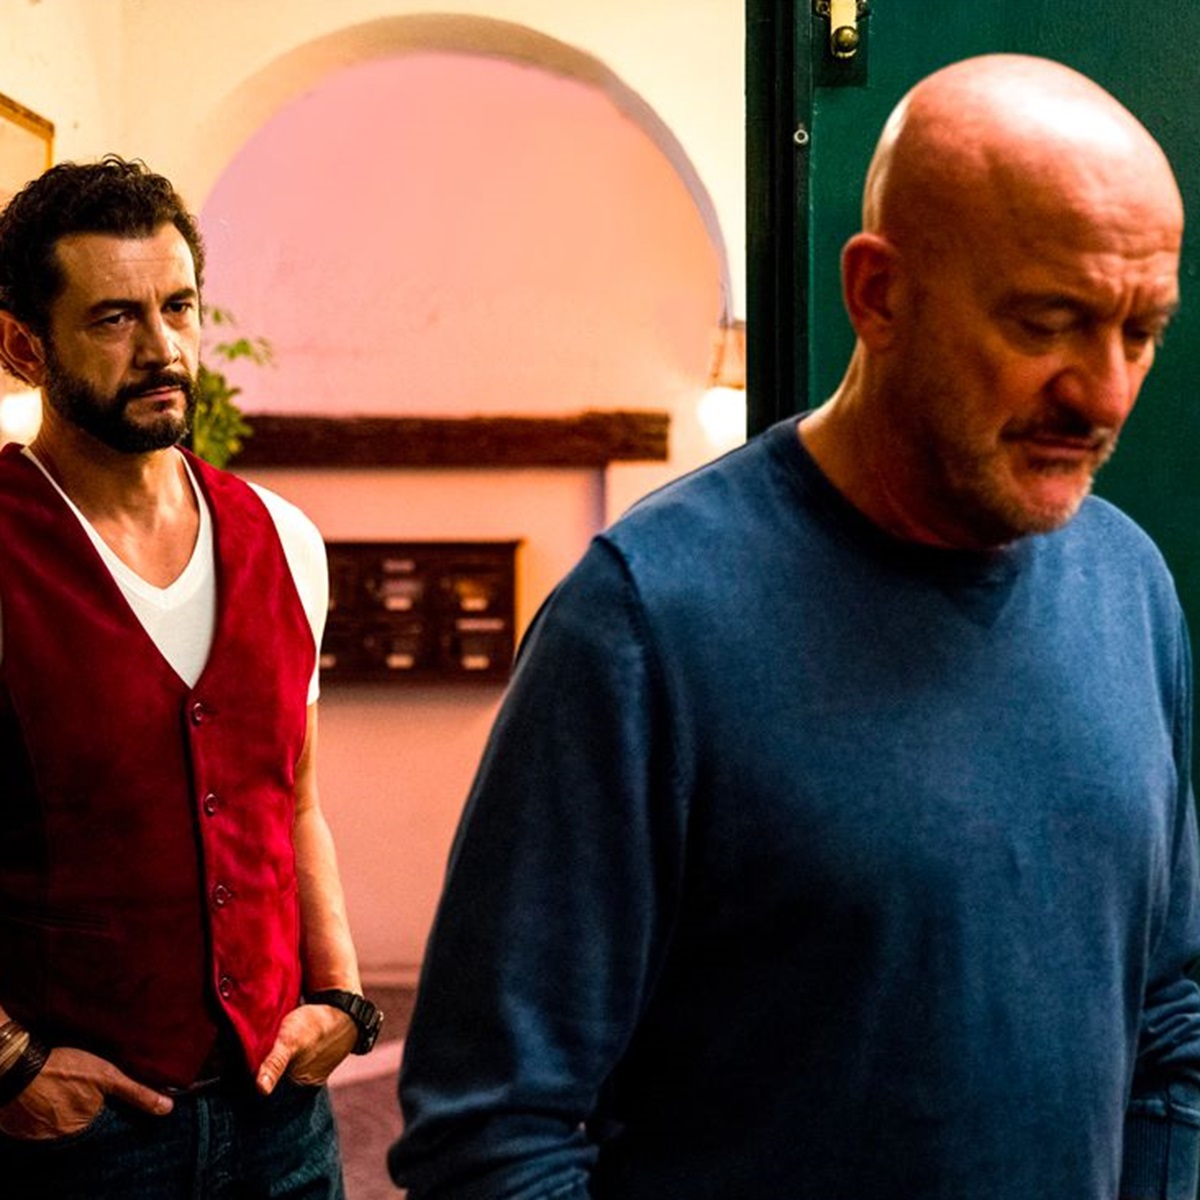 commedia italiana film vicini di casa trama cast recensione storia vera trailer claudio bisio 